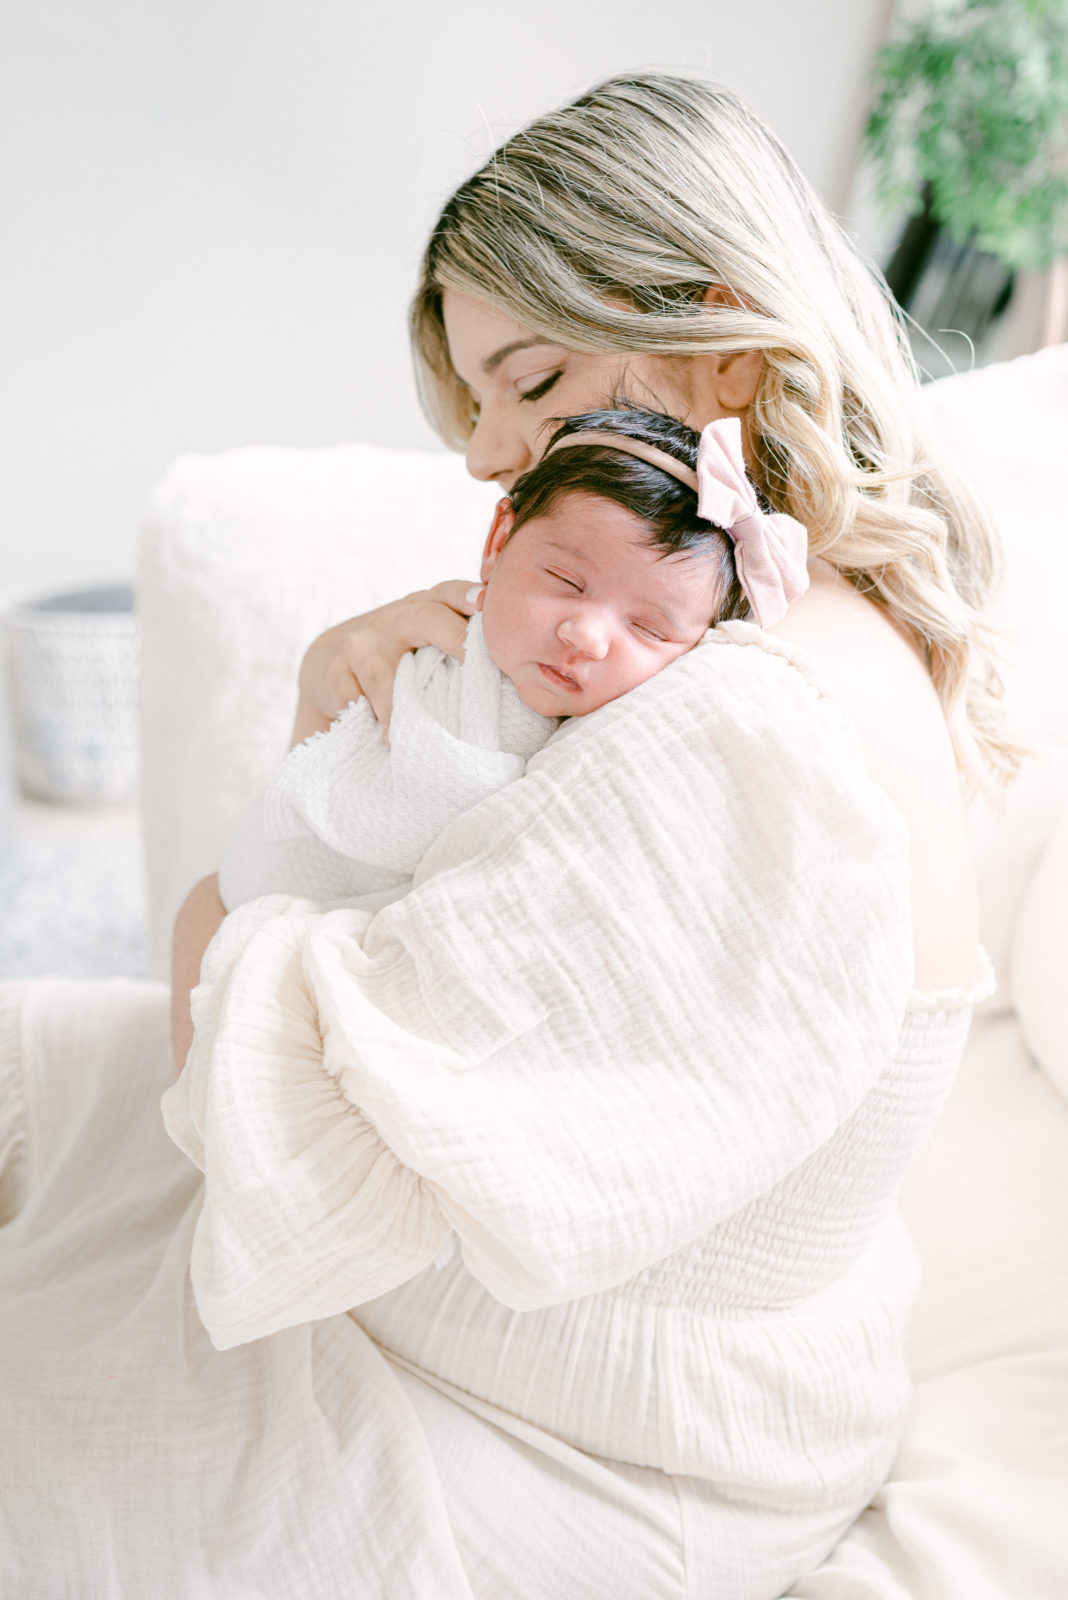 Mom holding newborn baby girl sleeping on her chest at home newborn photos